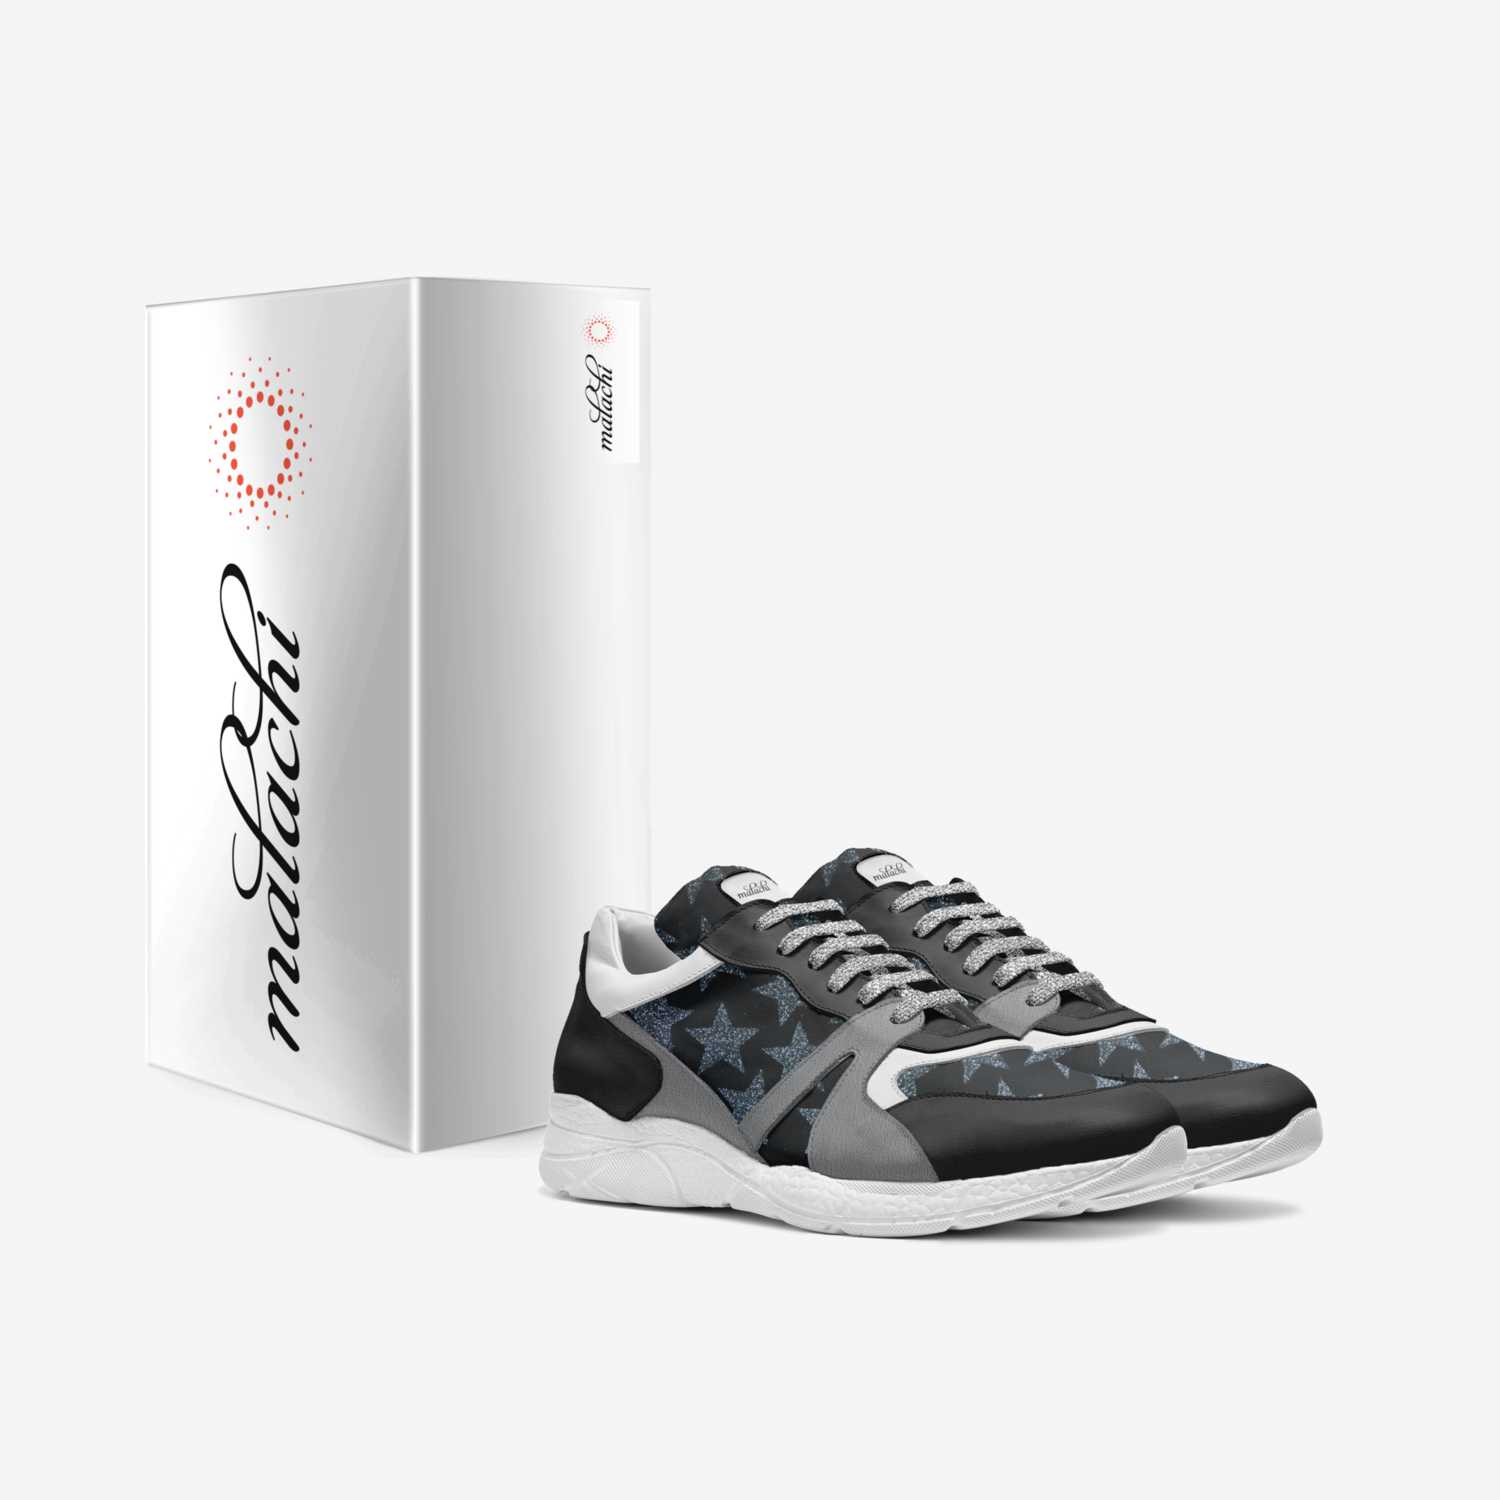 Malachi's custom made in Italy shoes by Rayhiem Davis | Box view